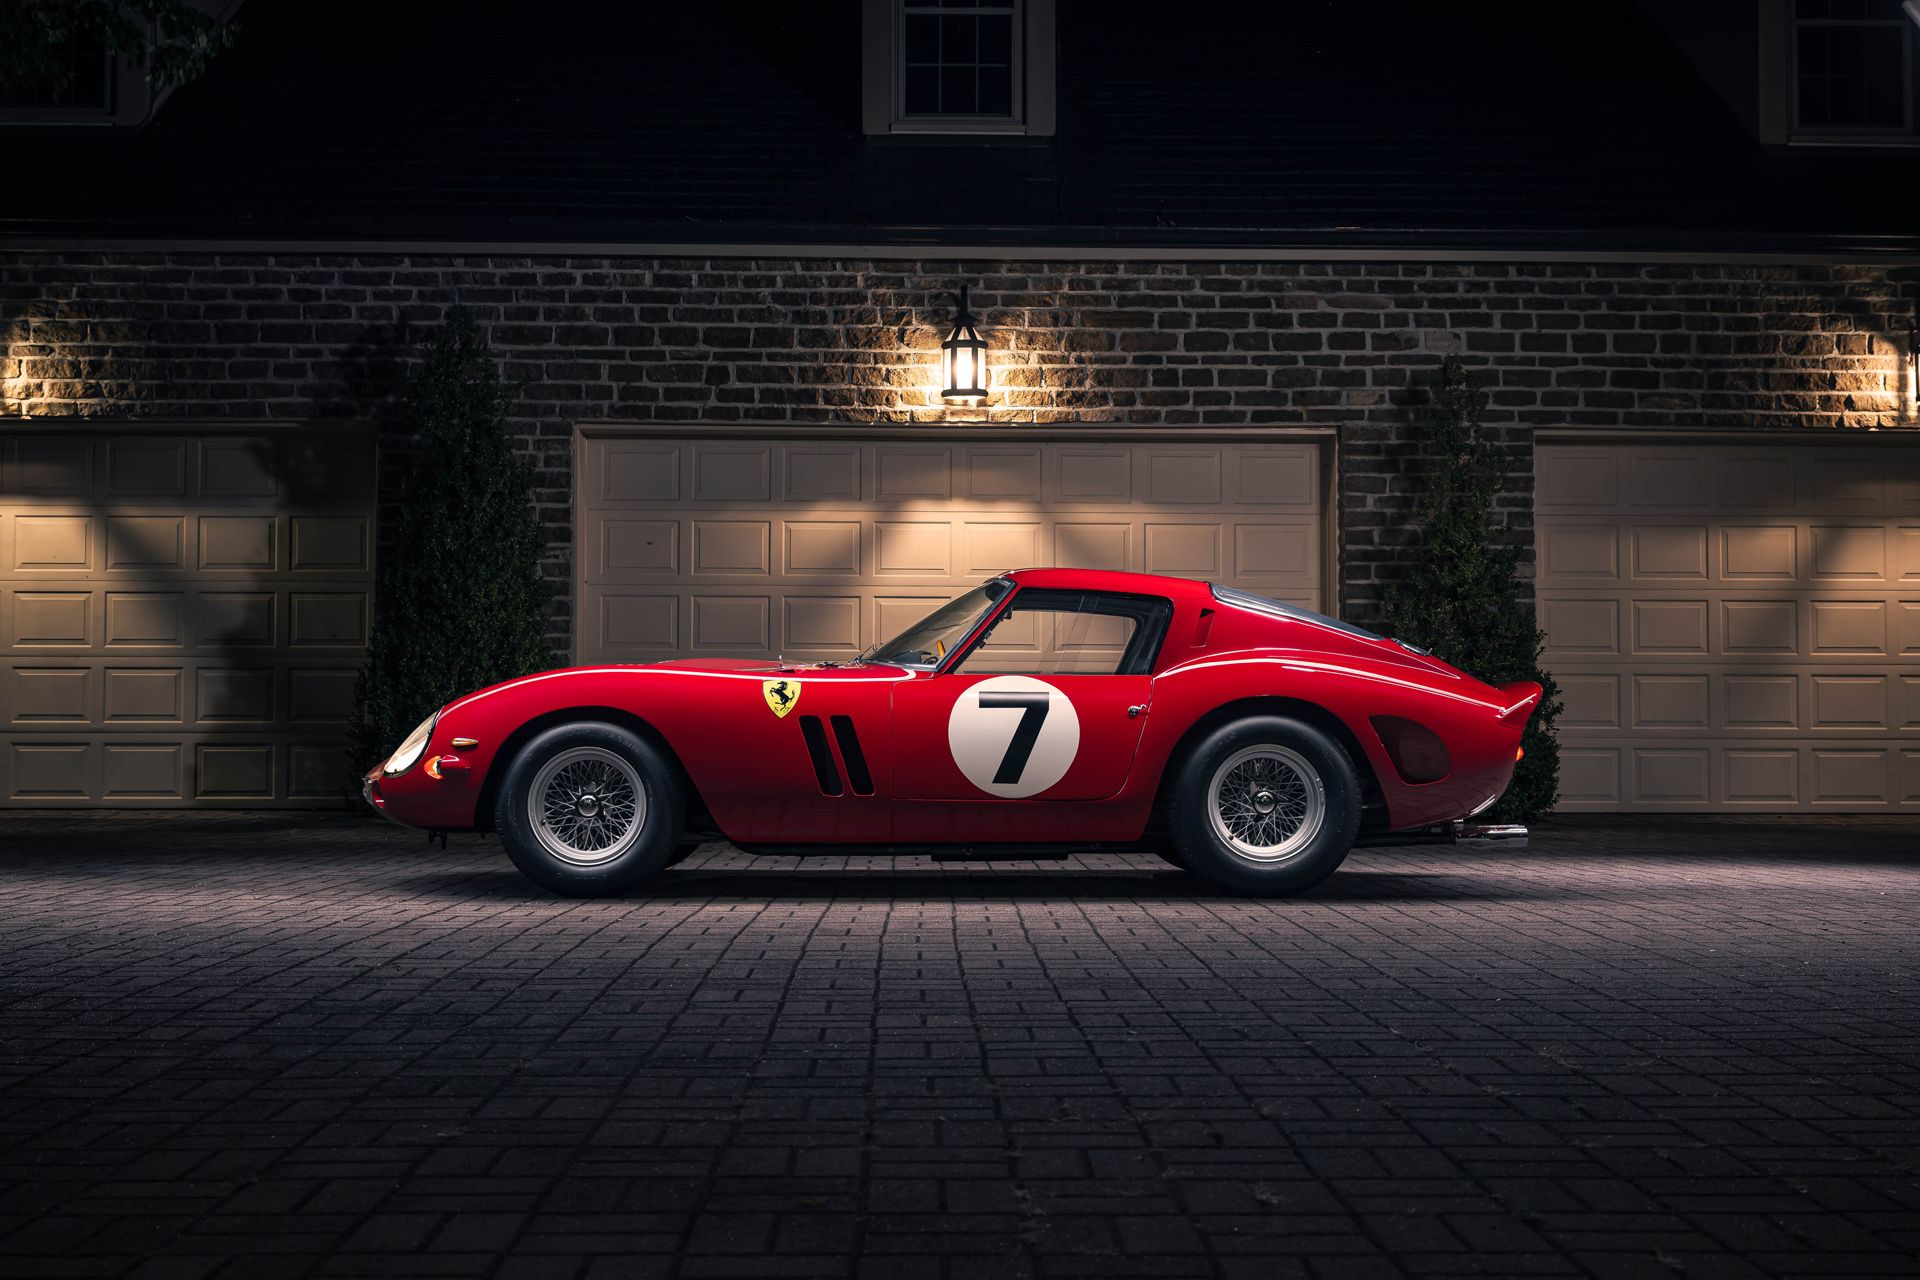 Siêu xe Ferrari 330 LM/250 GTO 1962 đấu giá gần 52 triệu USD